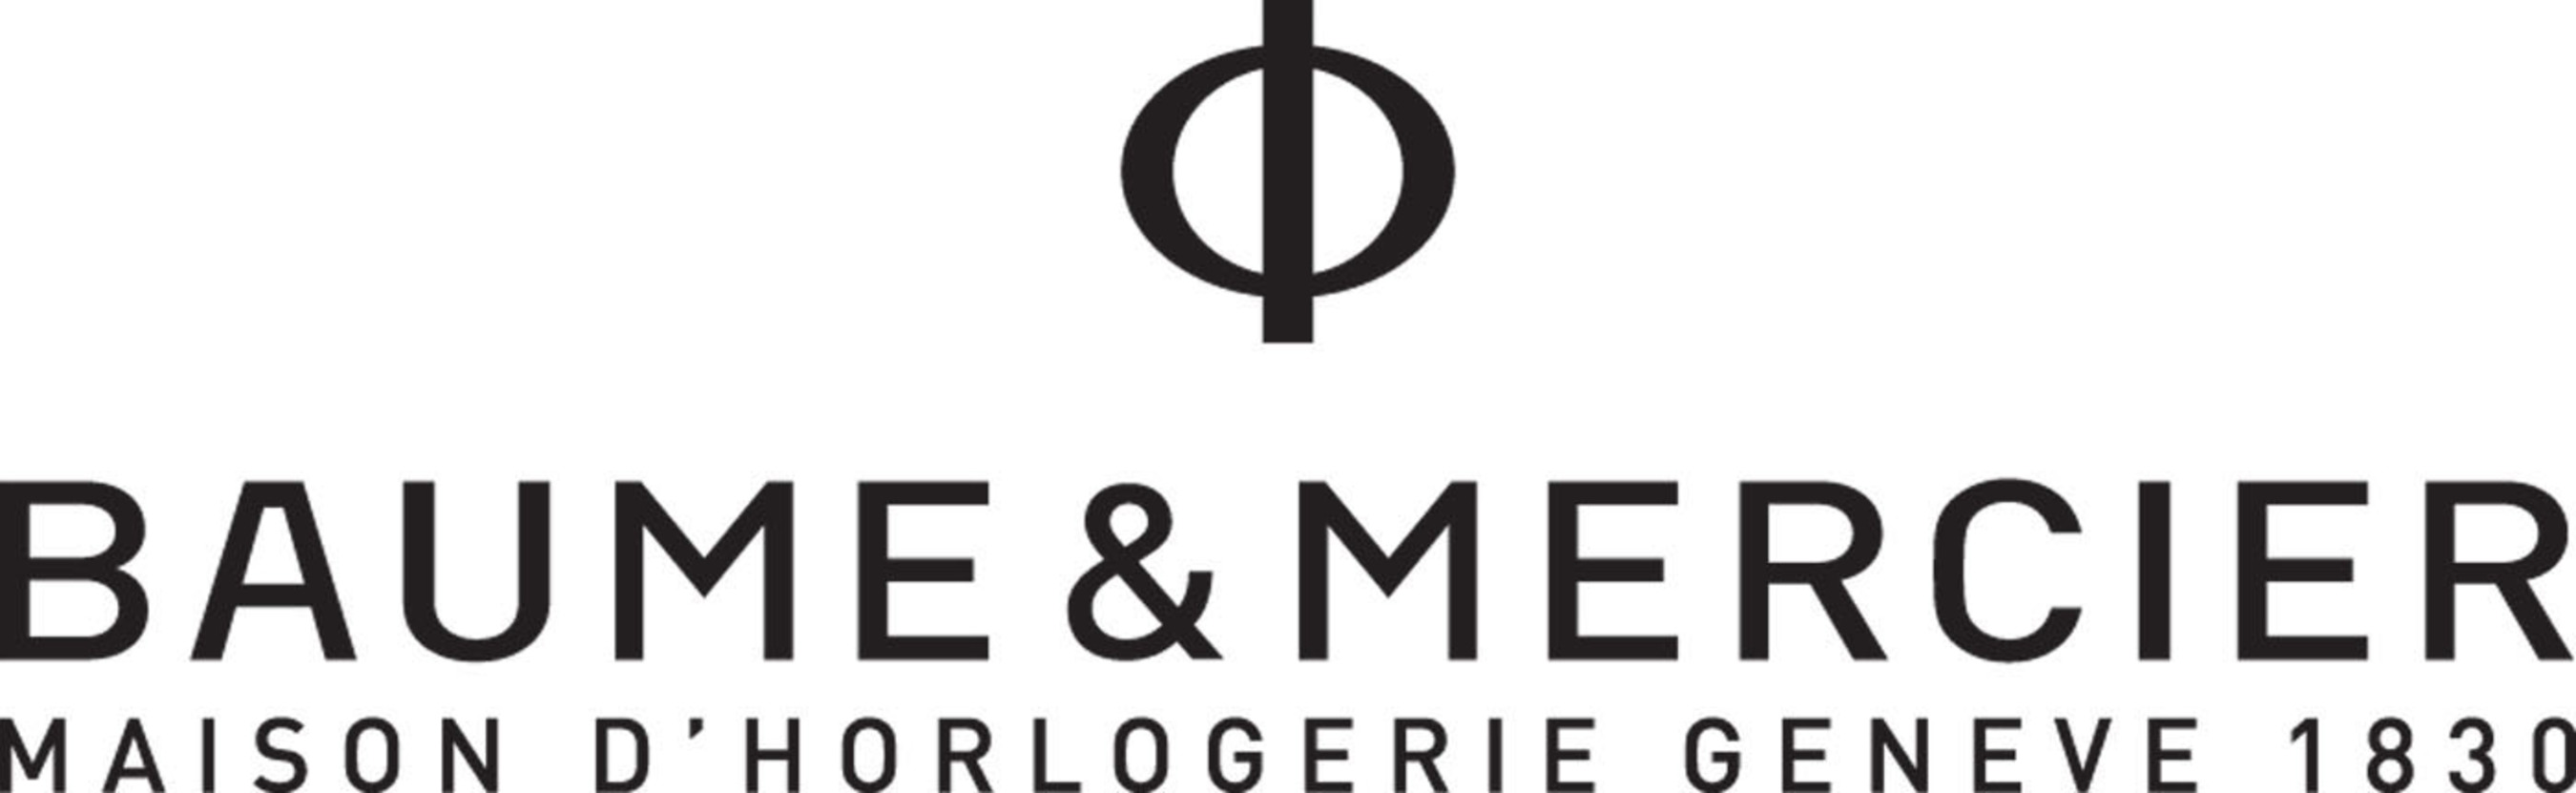 Baume & Mercier logo. (PRNewsFoto/Baume & Mercier) (PRNewsFoto/)